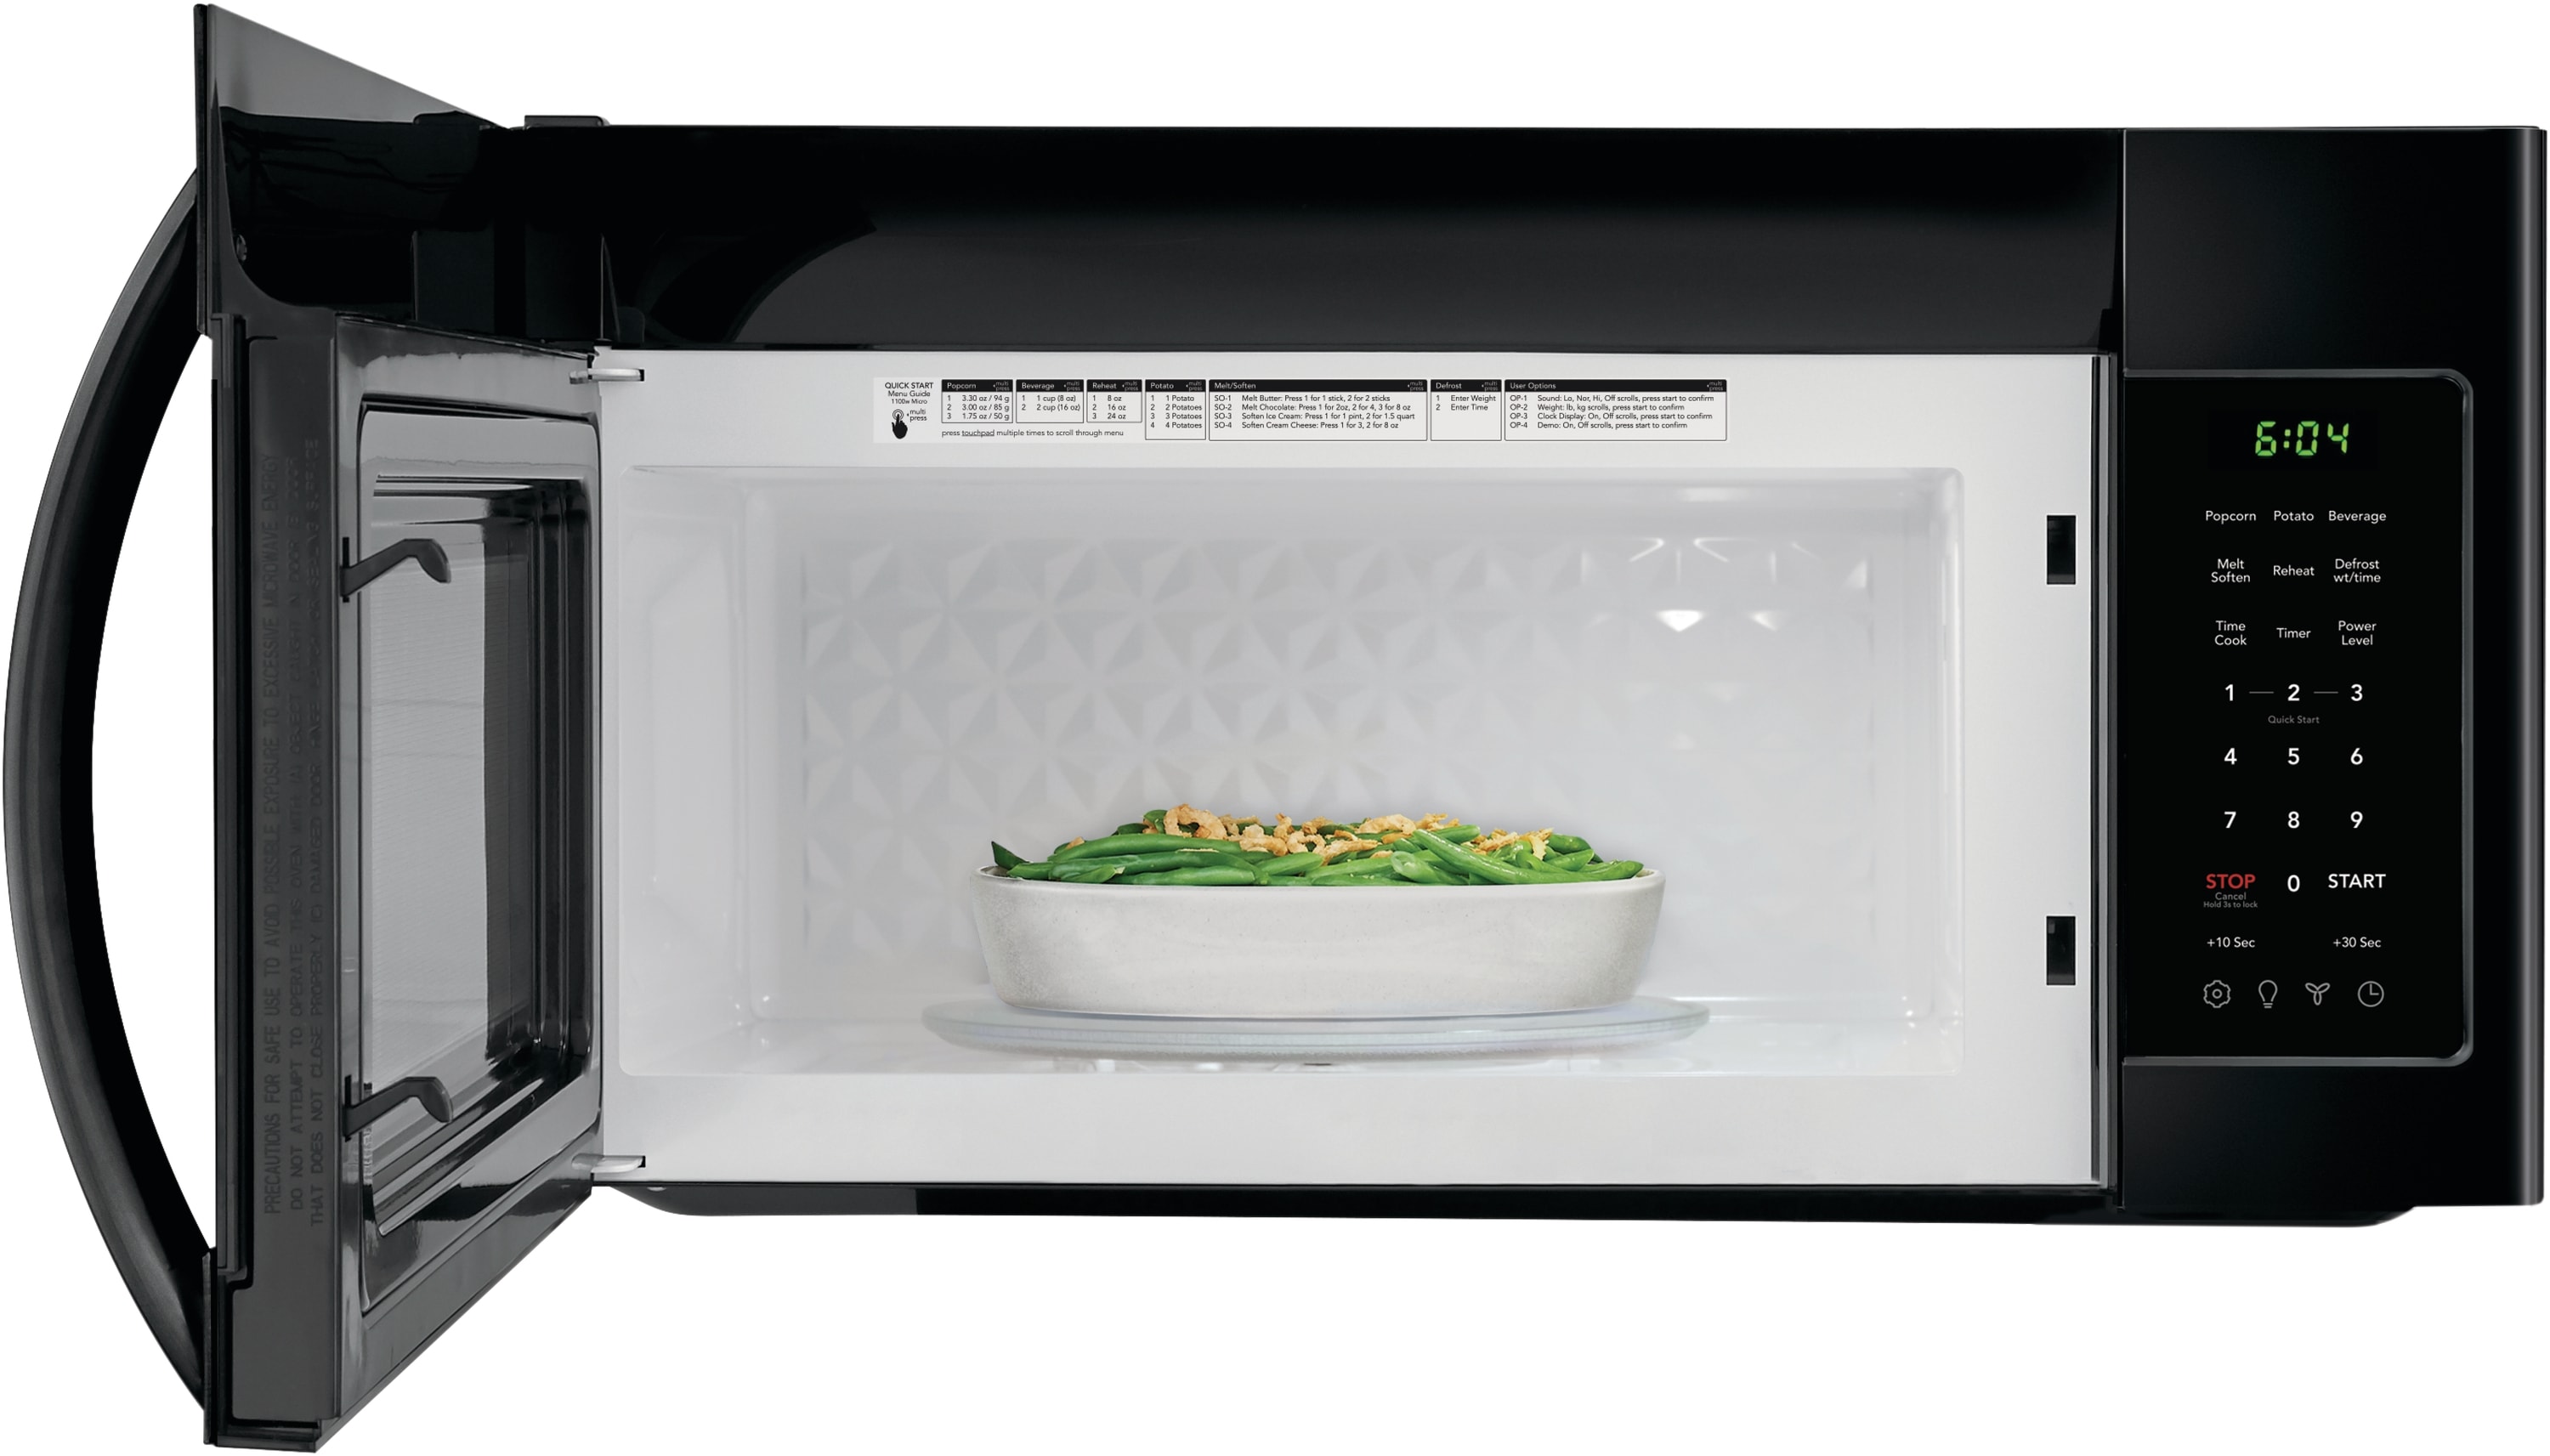 Microwaves - Black Friday Sale – Premium Home Source